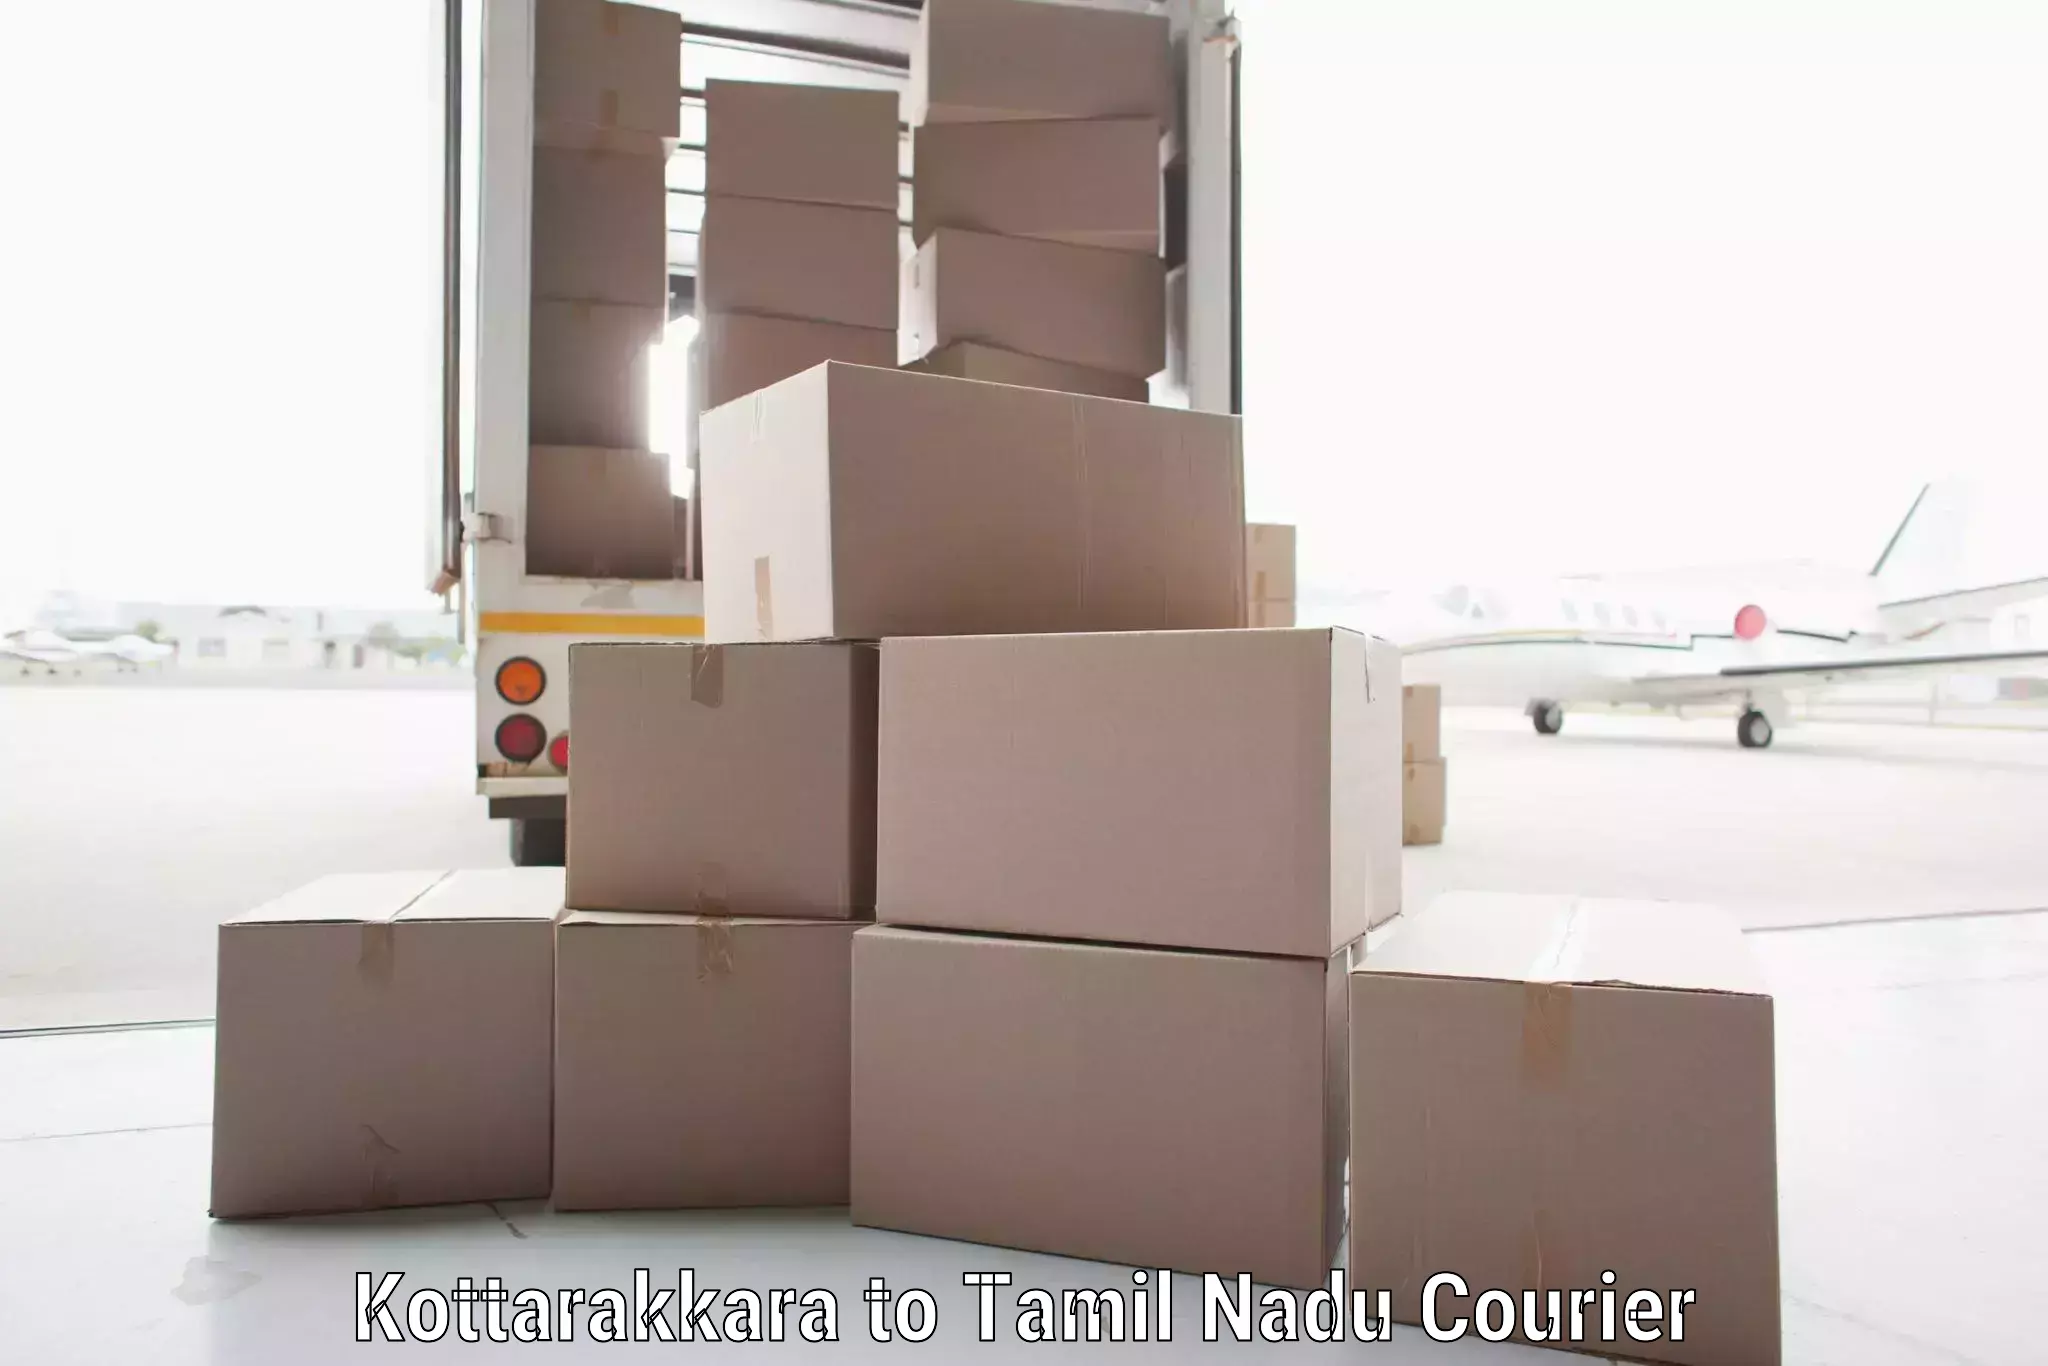 Express logistics providers Kottarakkara to Tamil Nadu